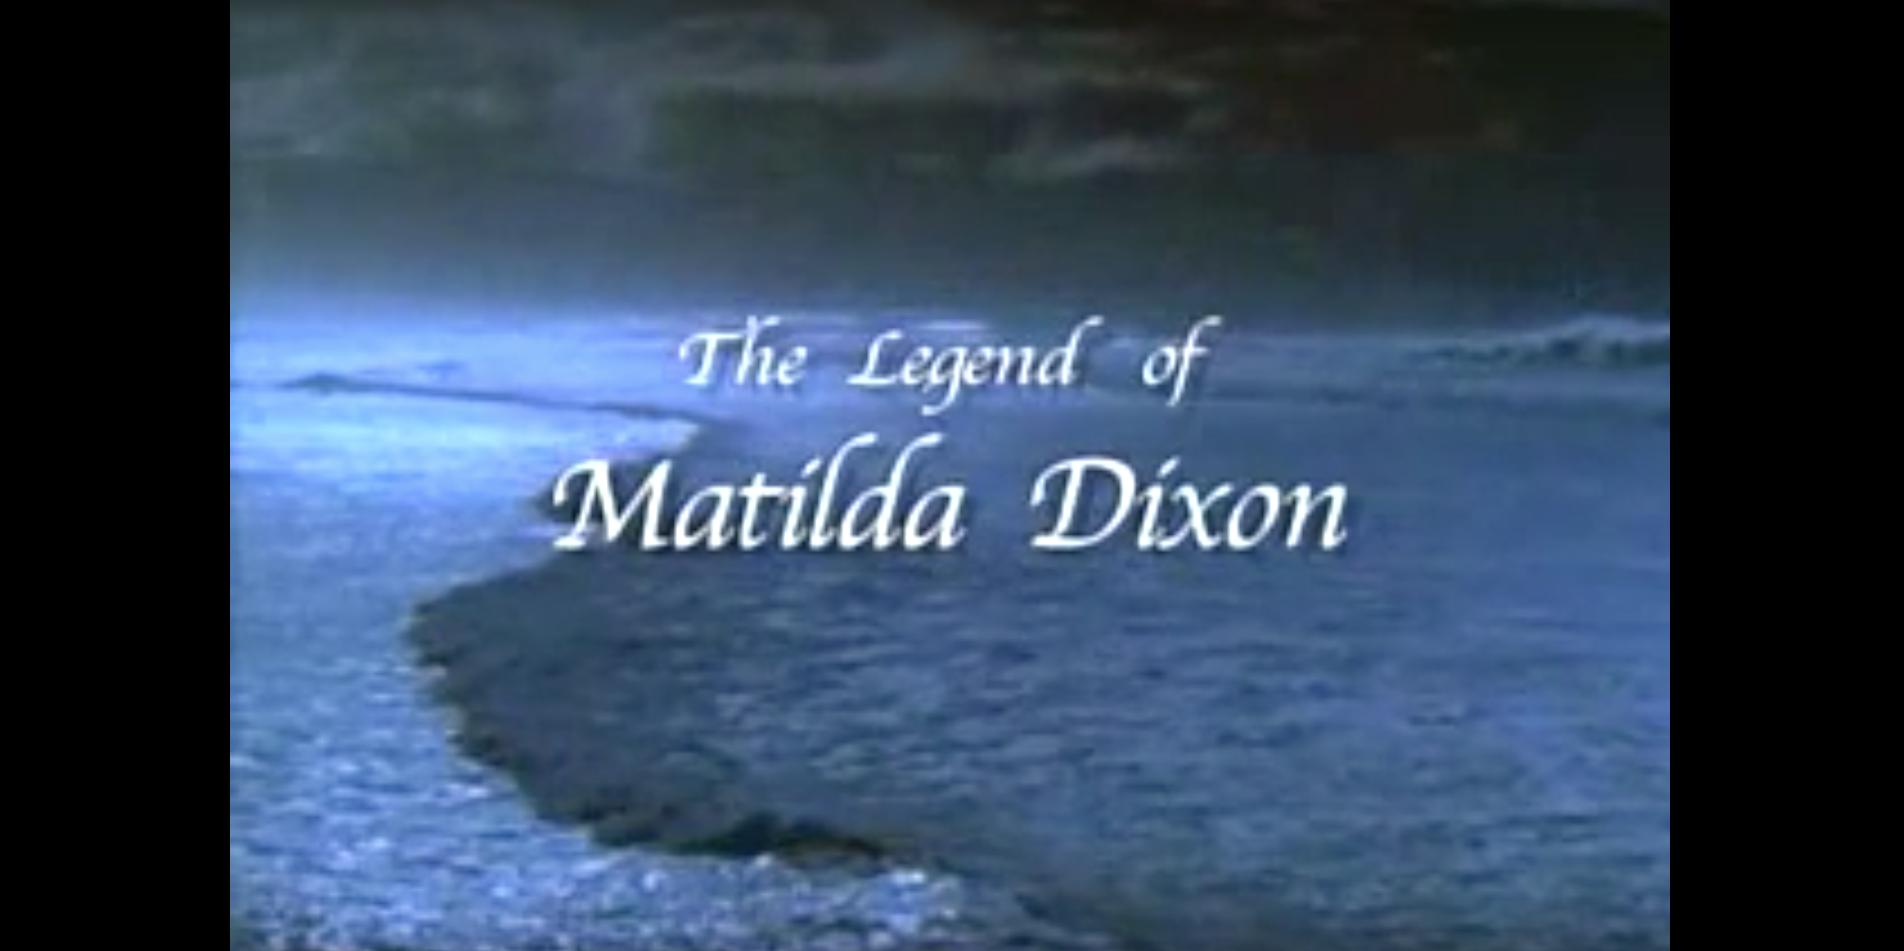 The Legend of Matilda Dixon